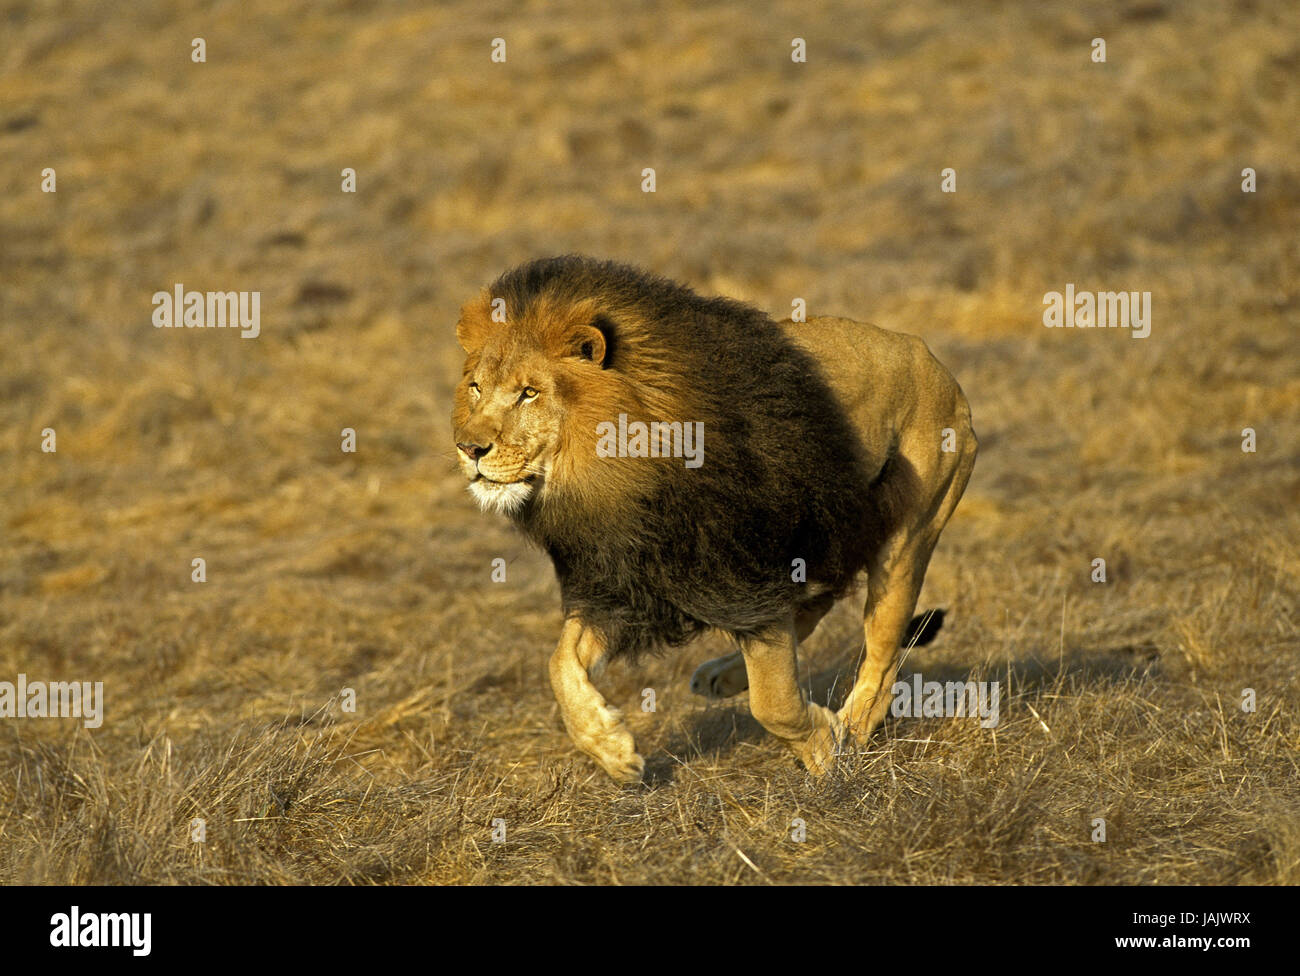 Lion,Panthera leo,piccoli uomini,savana, Foto Stock